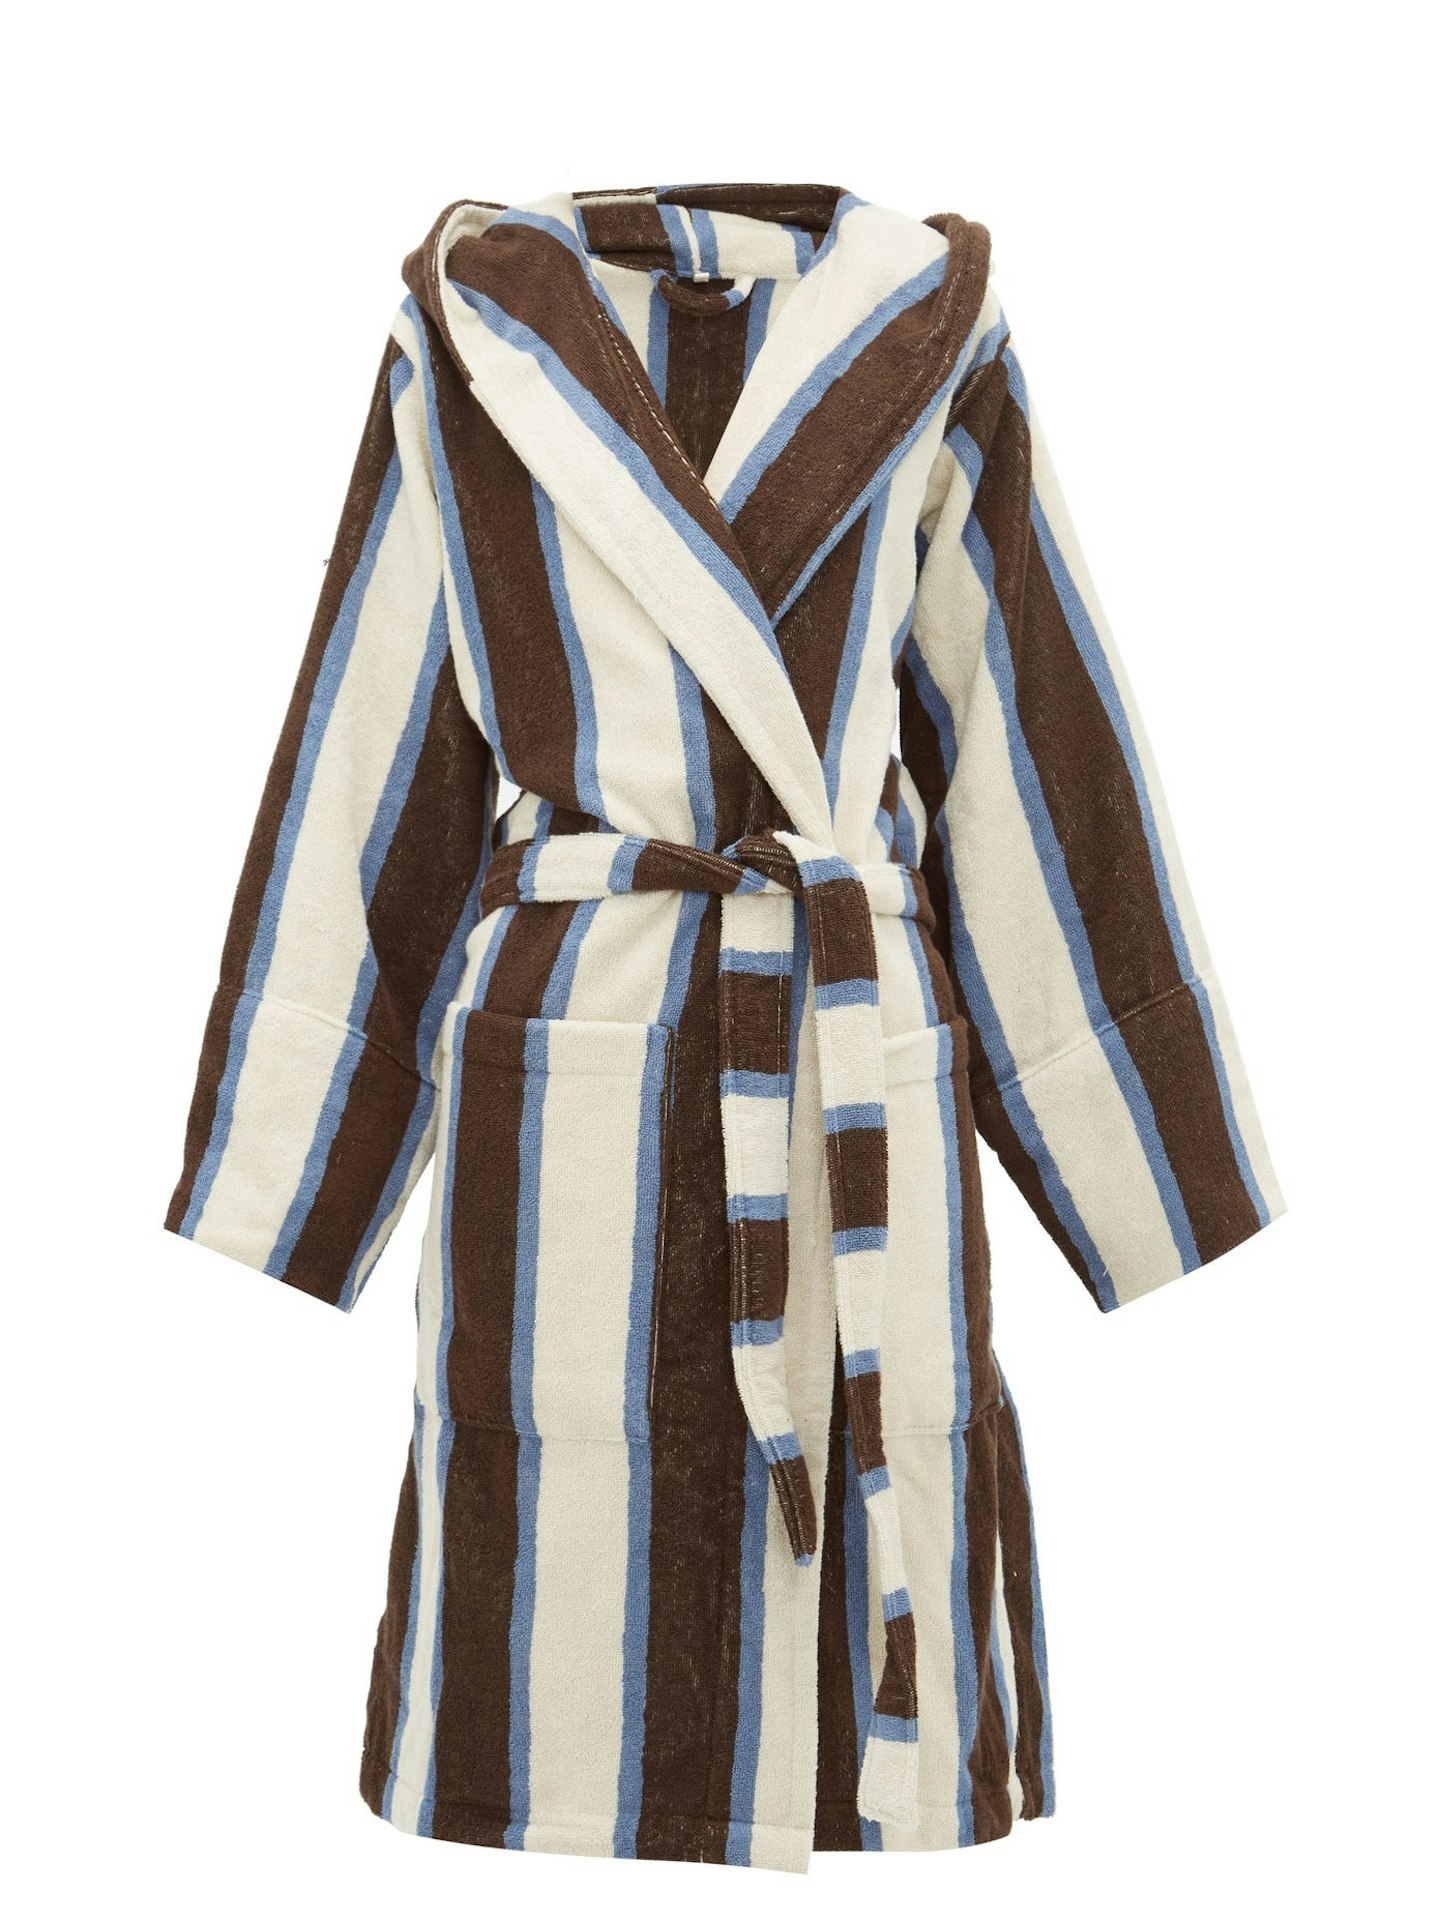 Tekla, Organic cotton-terry hooded robe, £165